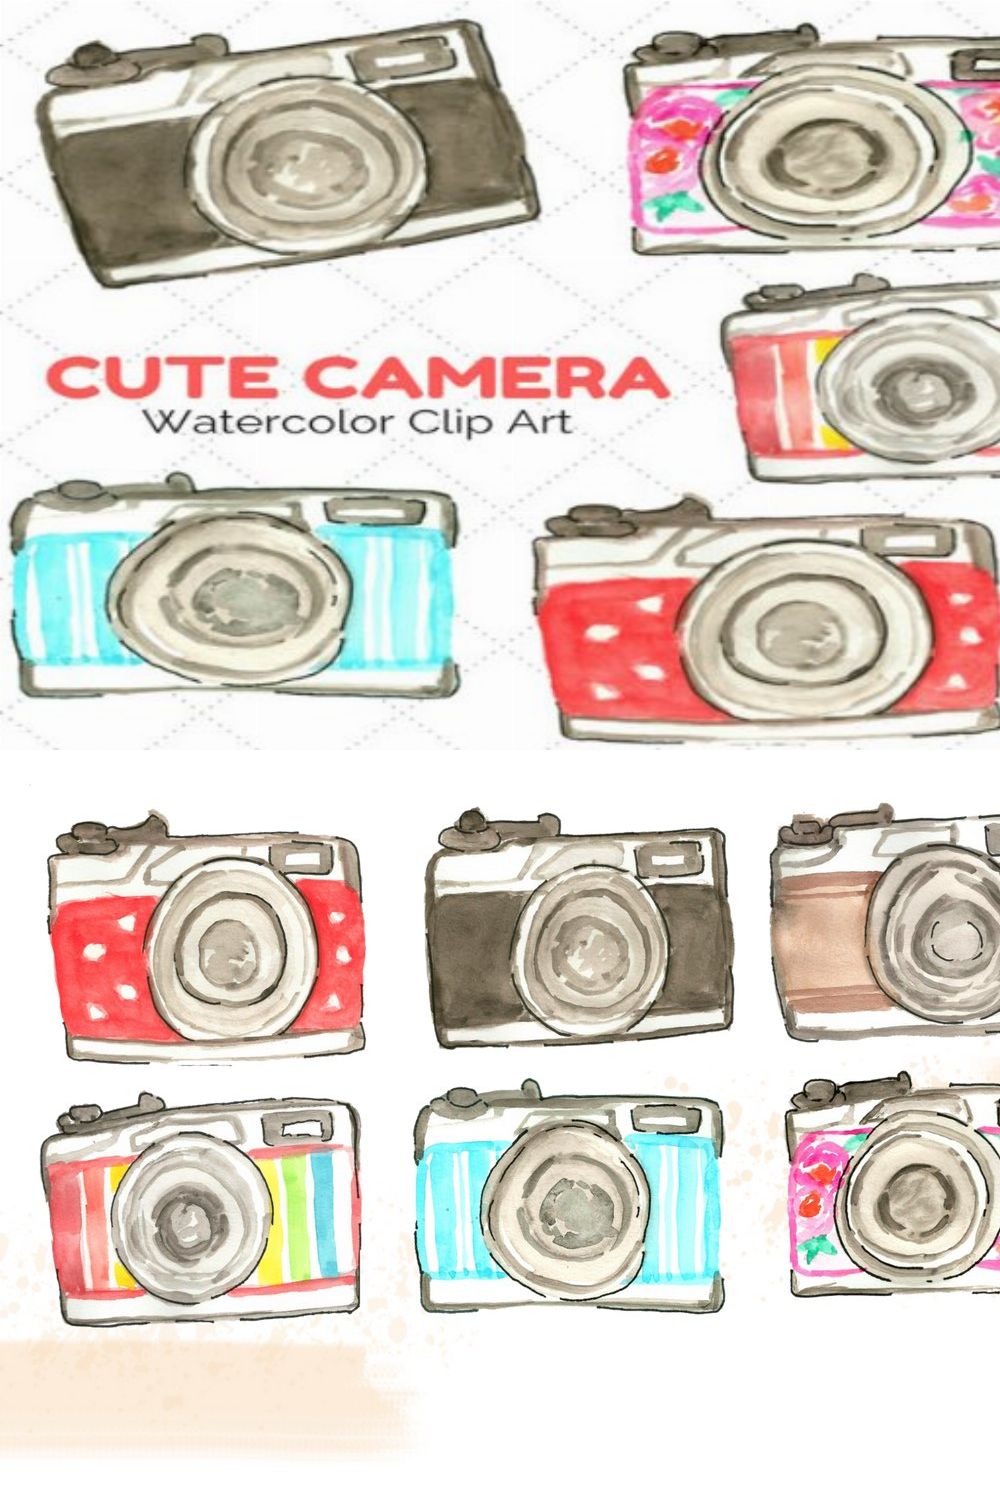 Cute Watercolor Cameras pinterest preview image.